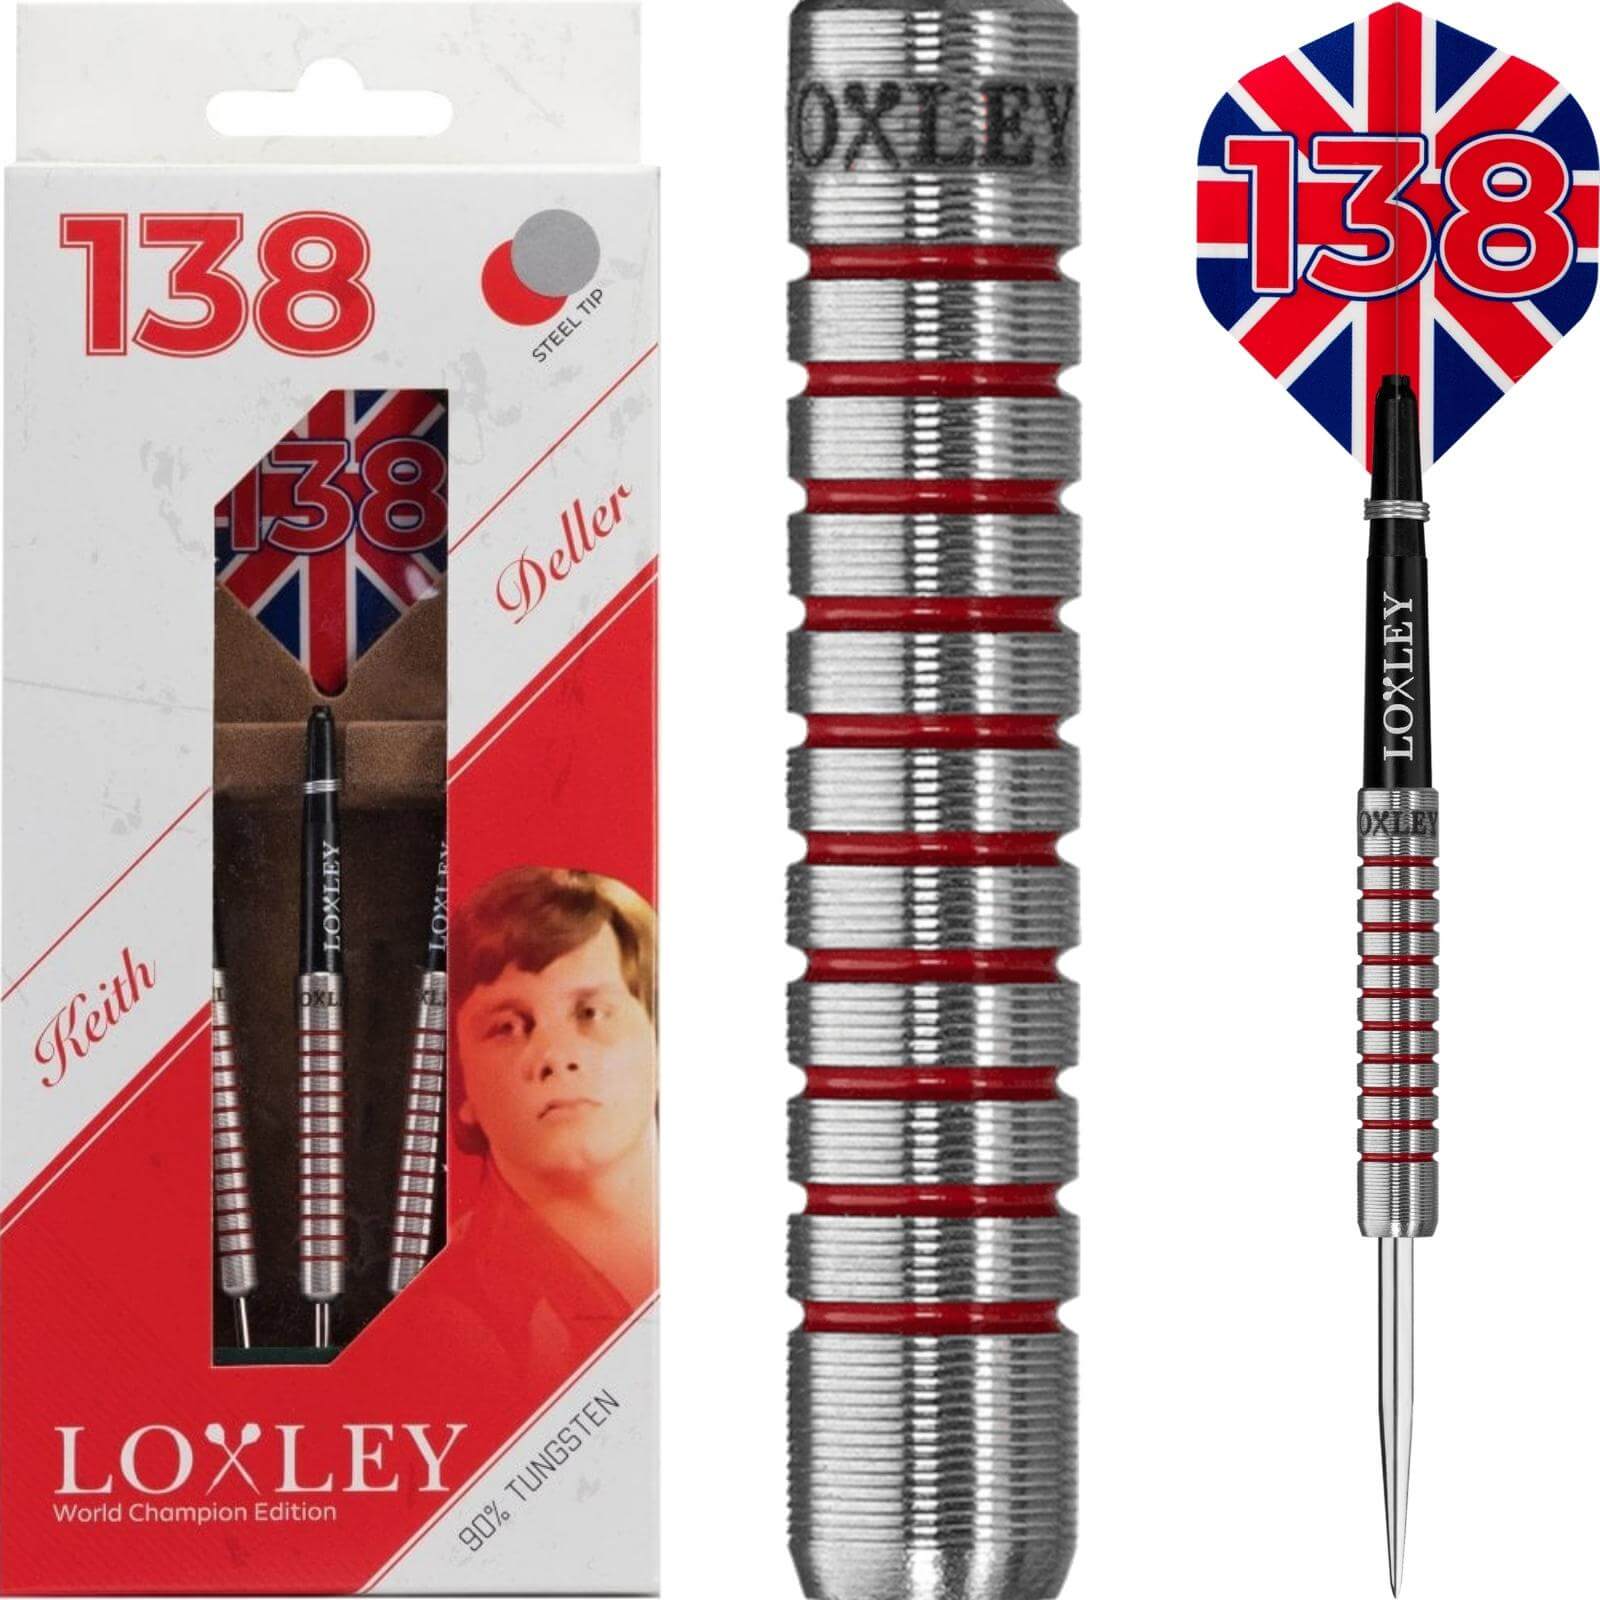 Darts - Loxley - Keith Deller Darts - Steel Tip - 90% Tungsten - 19g 21g 23g 